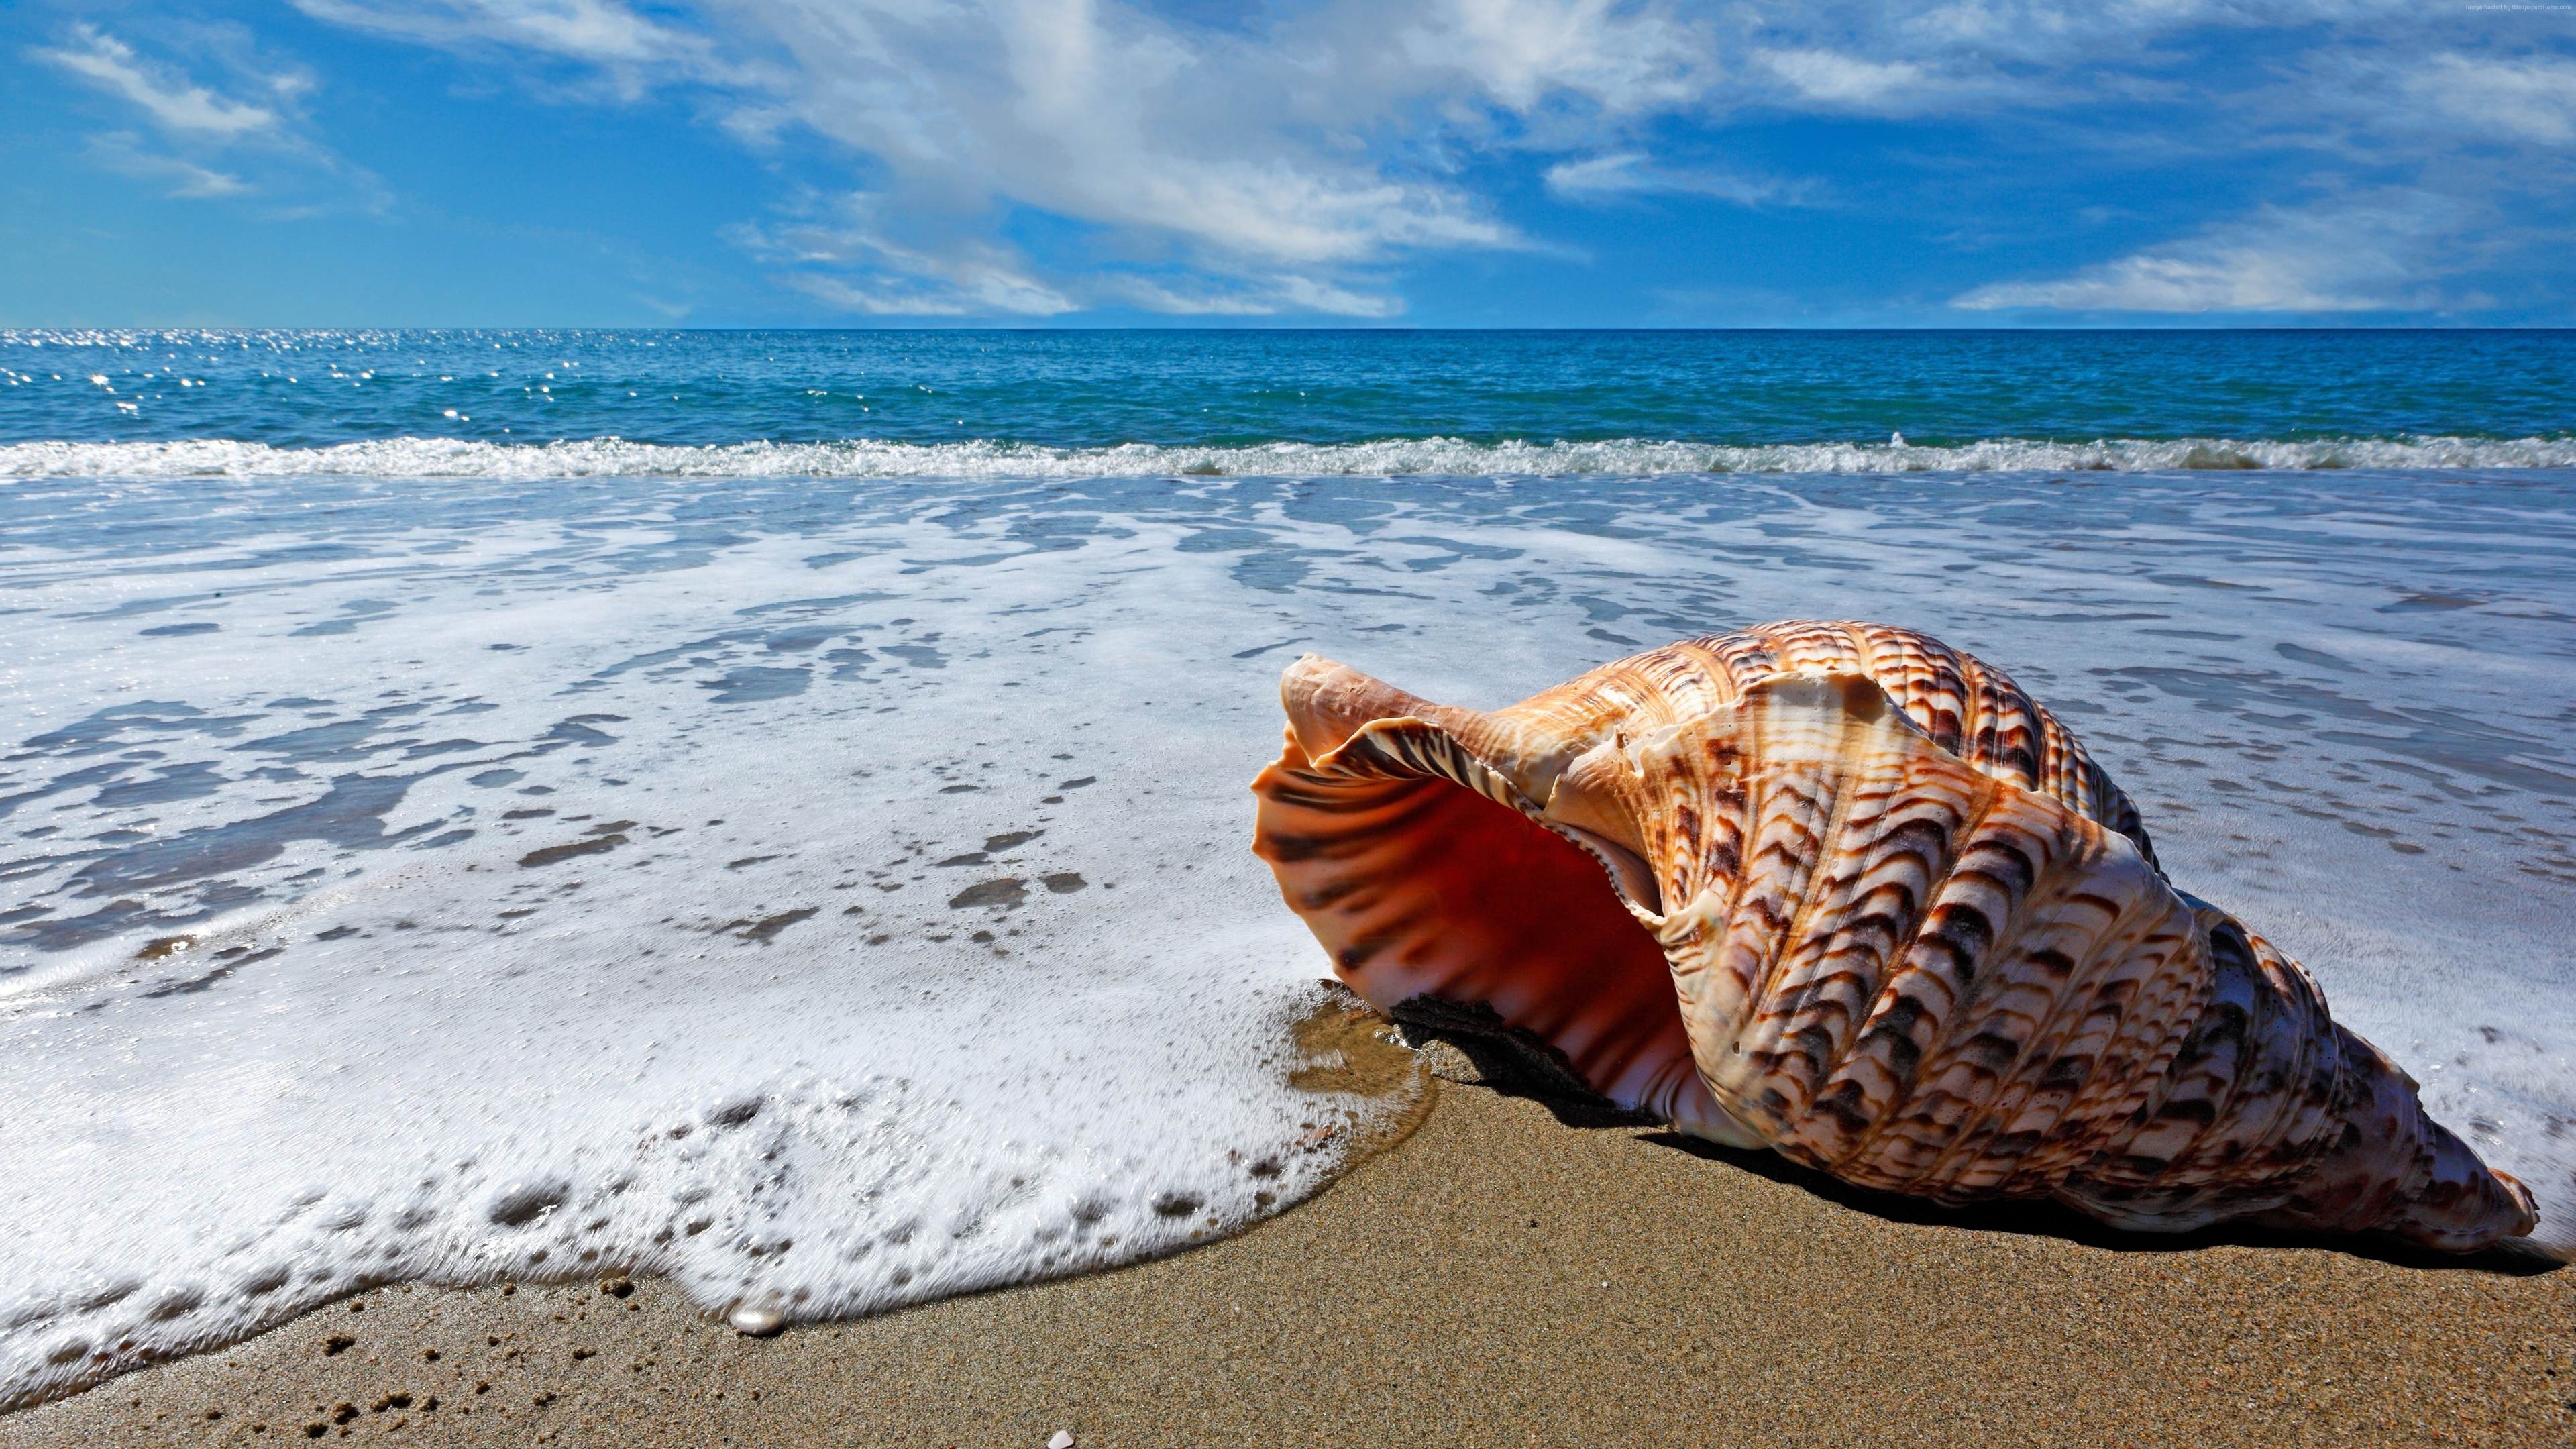 Sea Shell on Sea Shore for 3840 x 2160 4K Ultra HDTV resolution